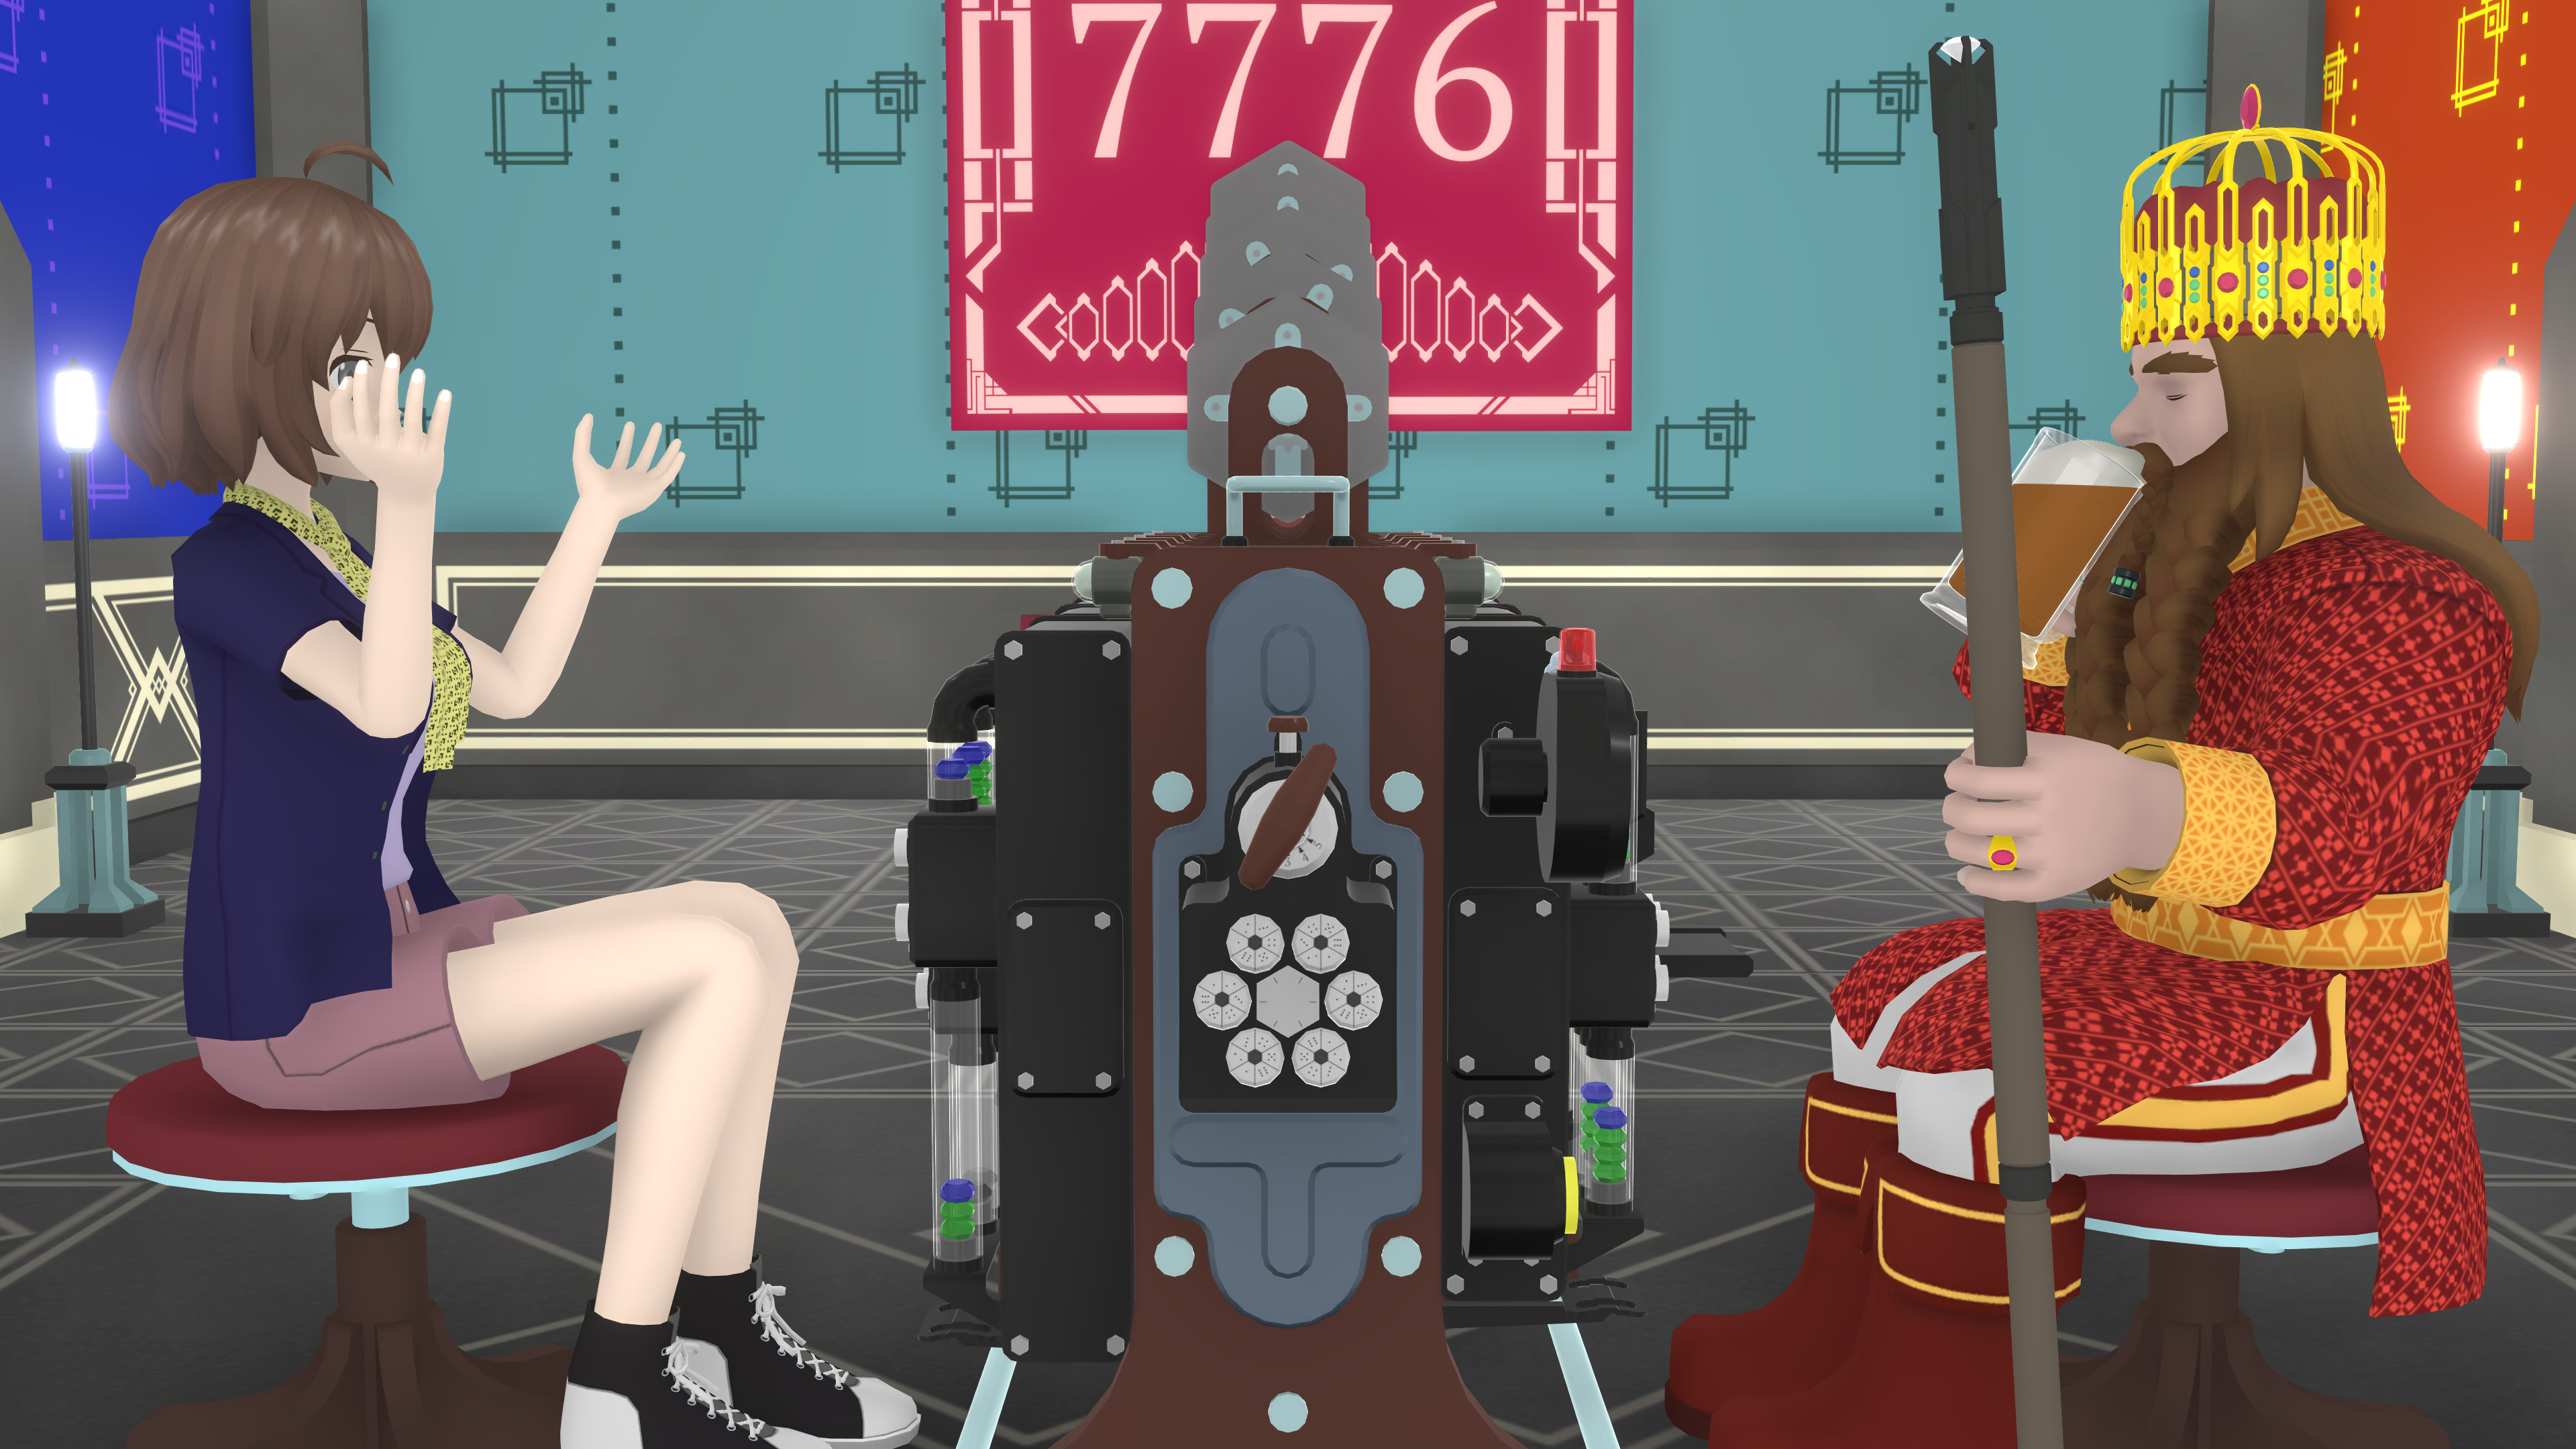 7776 II: Dwarven Greed screenshot